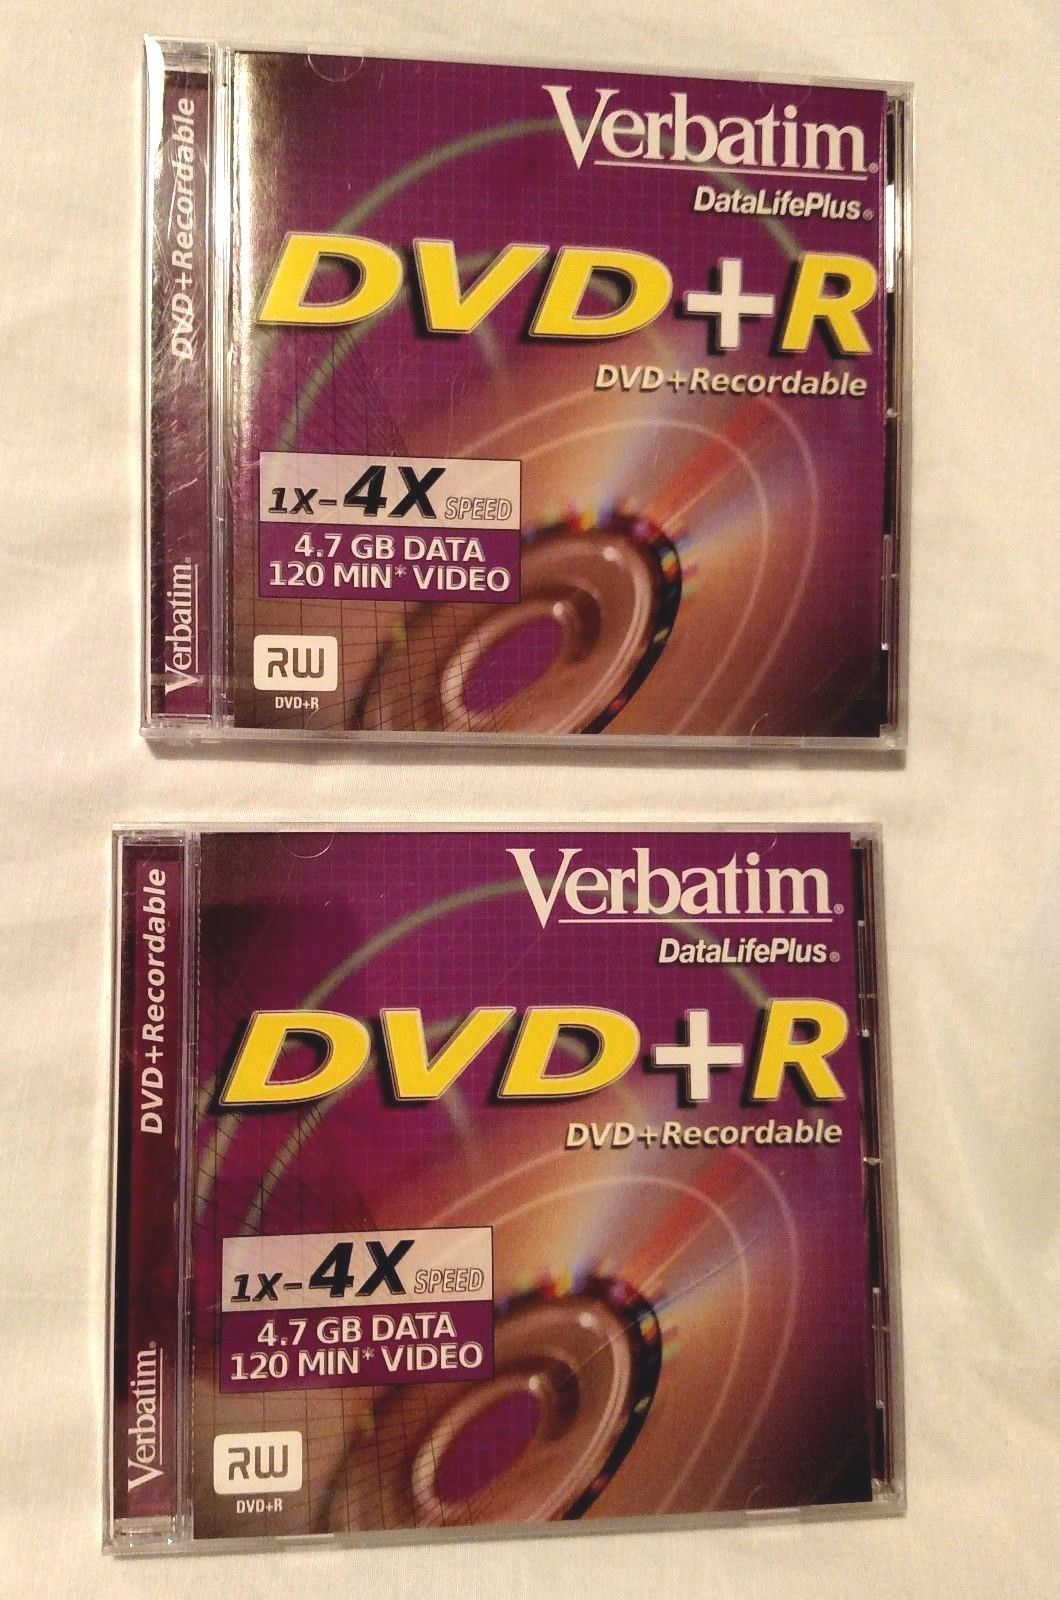 NEW VERBATIM DataLifePlus DVD+R Recordable 1x-4x 4.7 GB Data 120min Video DVD RW - $24.95